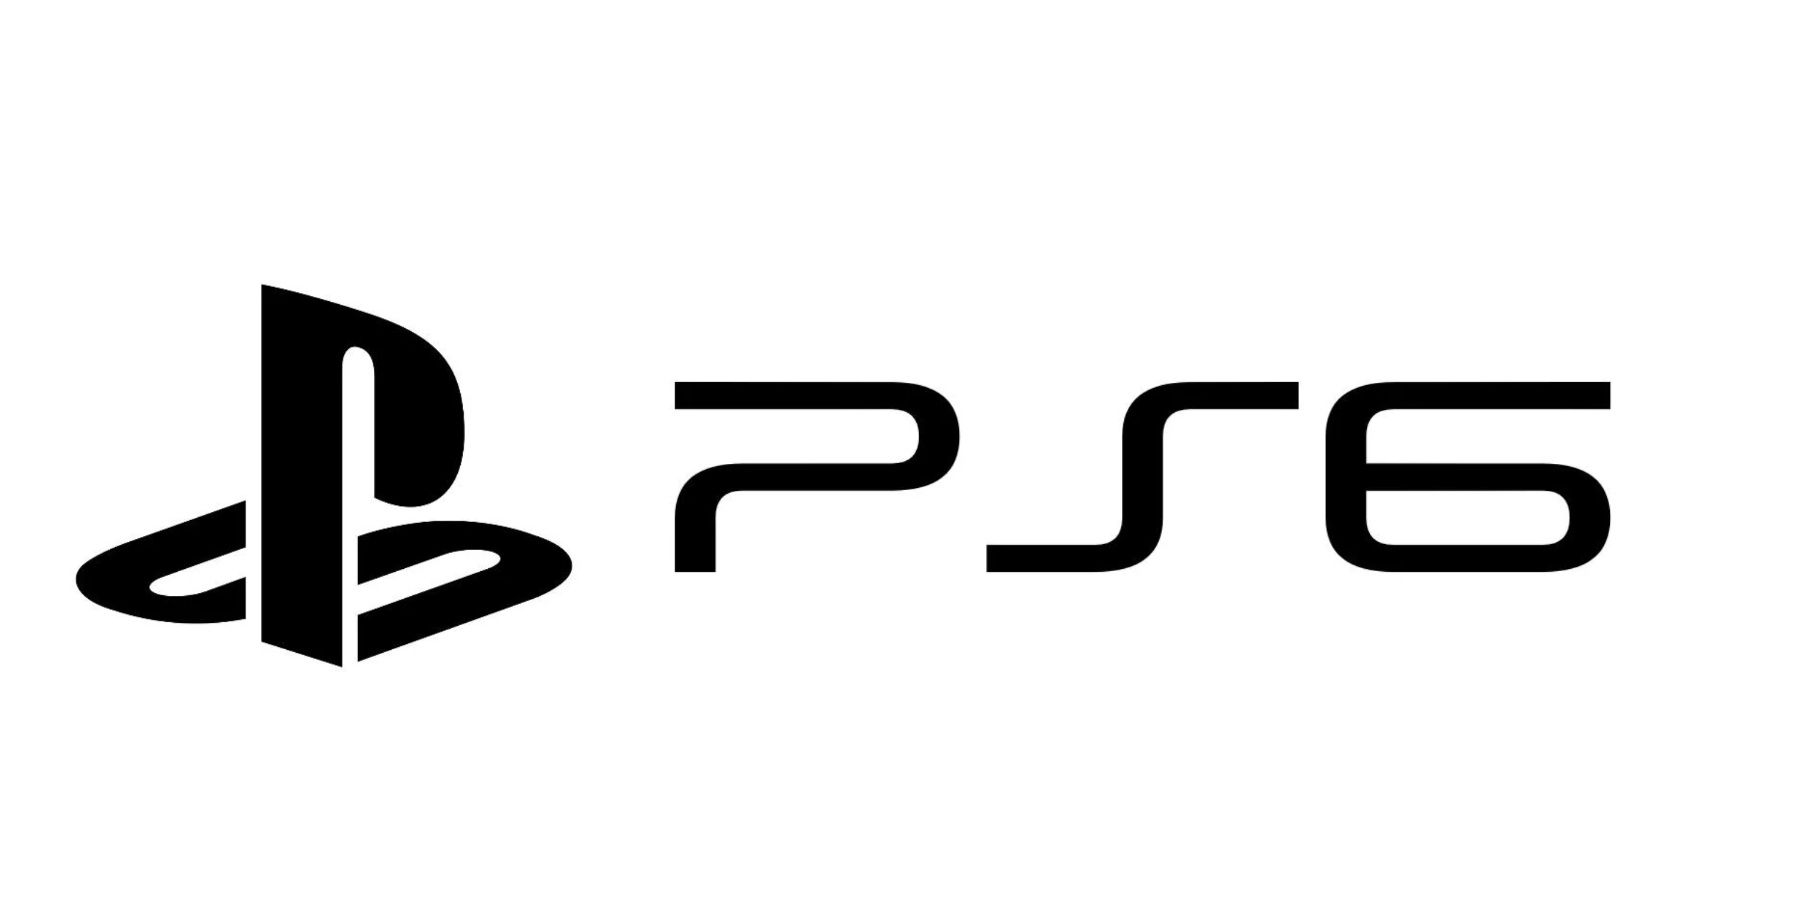 ps6 playstation 6 fake unofficial logo